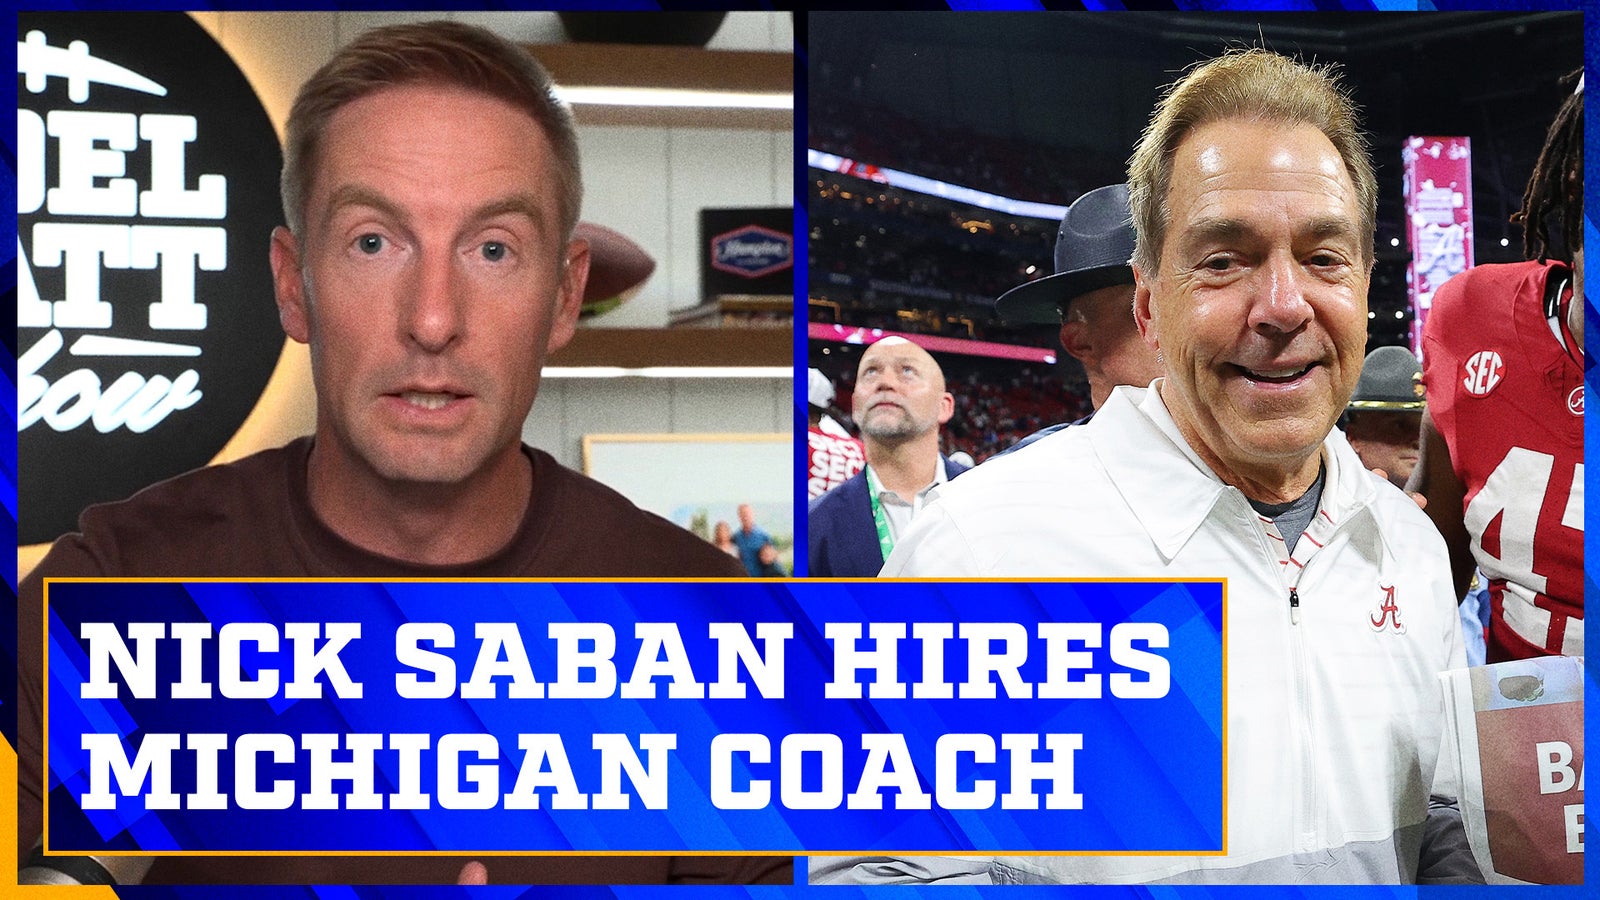 Does hiring former Michigan LBs coach give Alabama an edge?